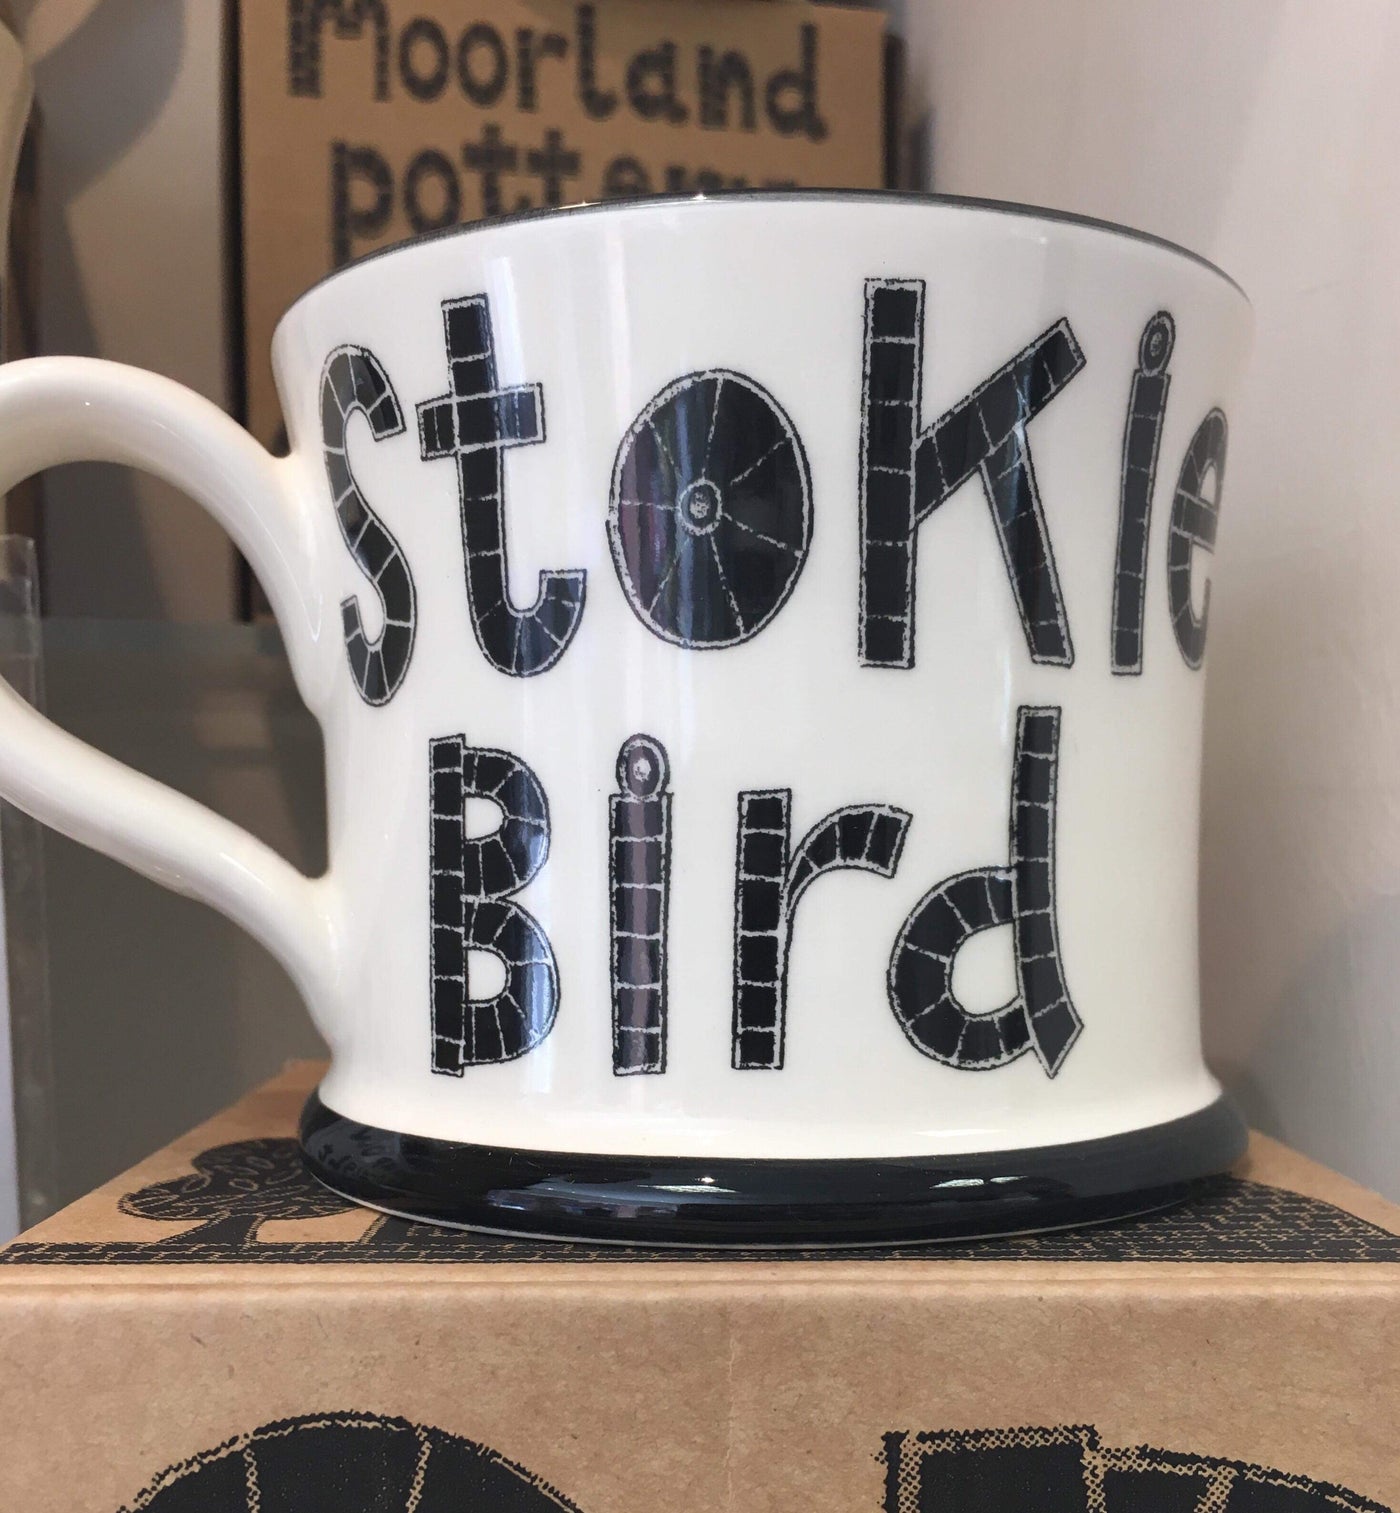 Moorland Pottery "Stokie Bird" Mug